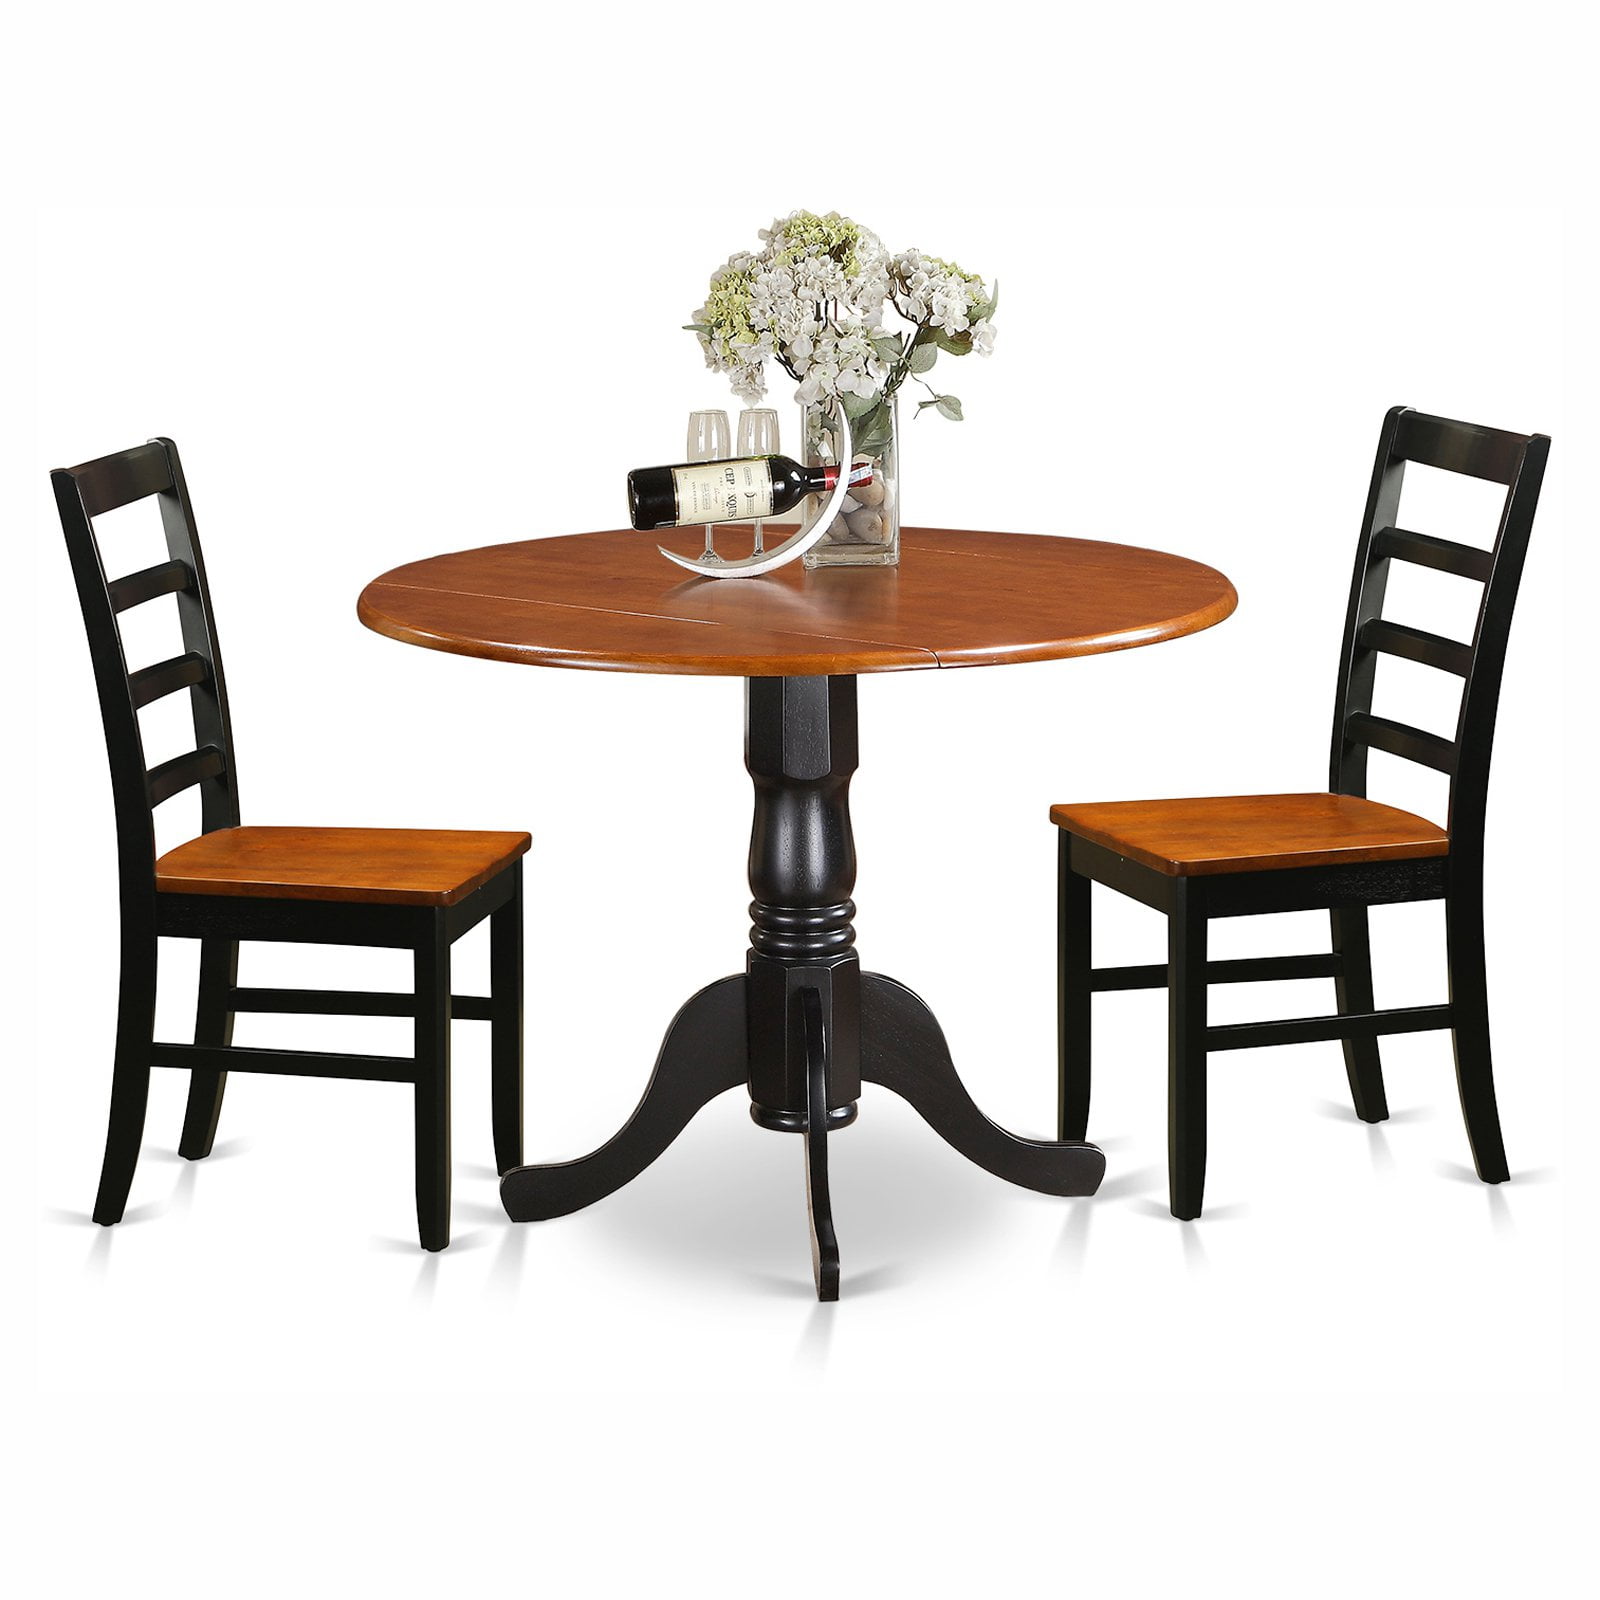 2 wood seat chairs black 3pc Dinette Dublin drop leaf kitchen pedestal table 